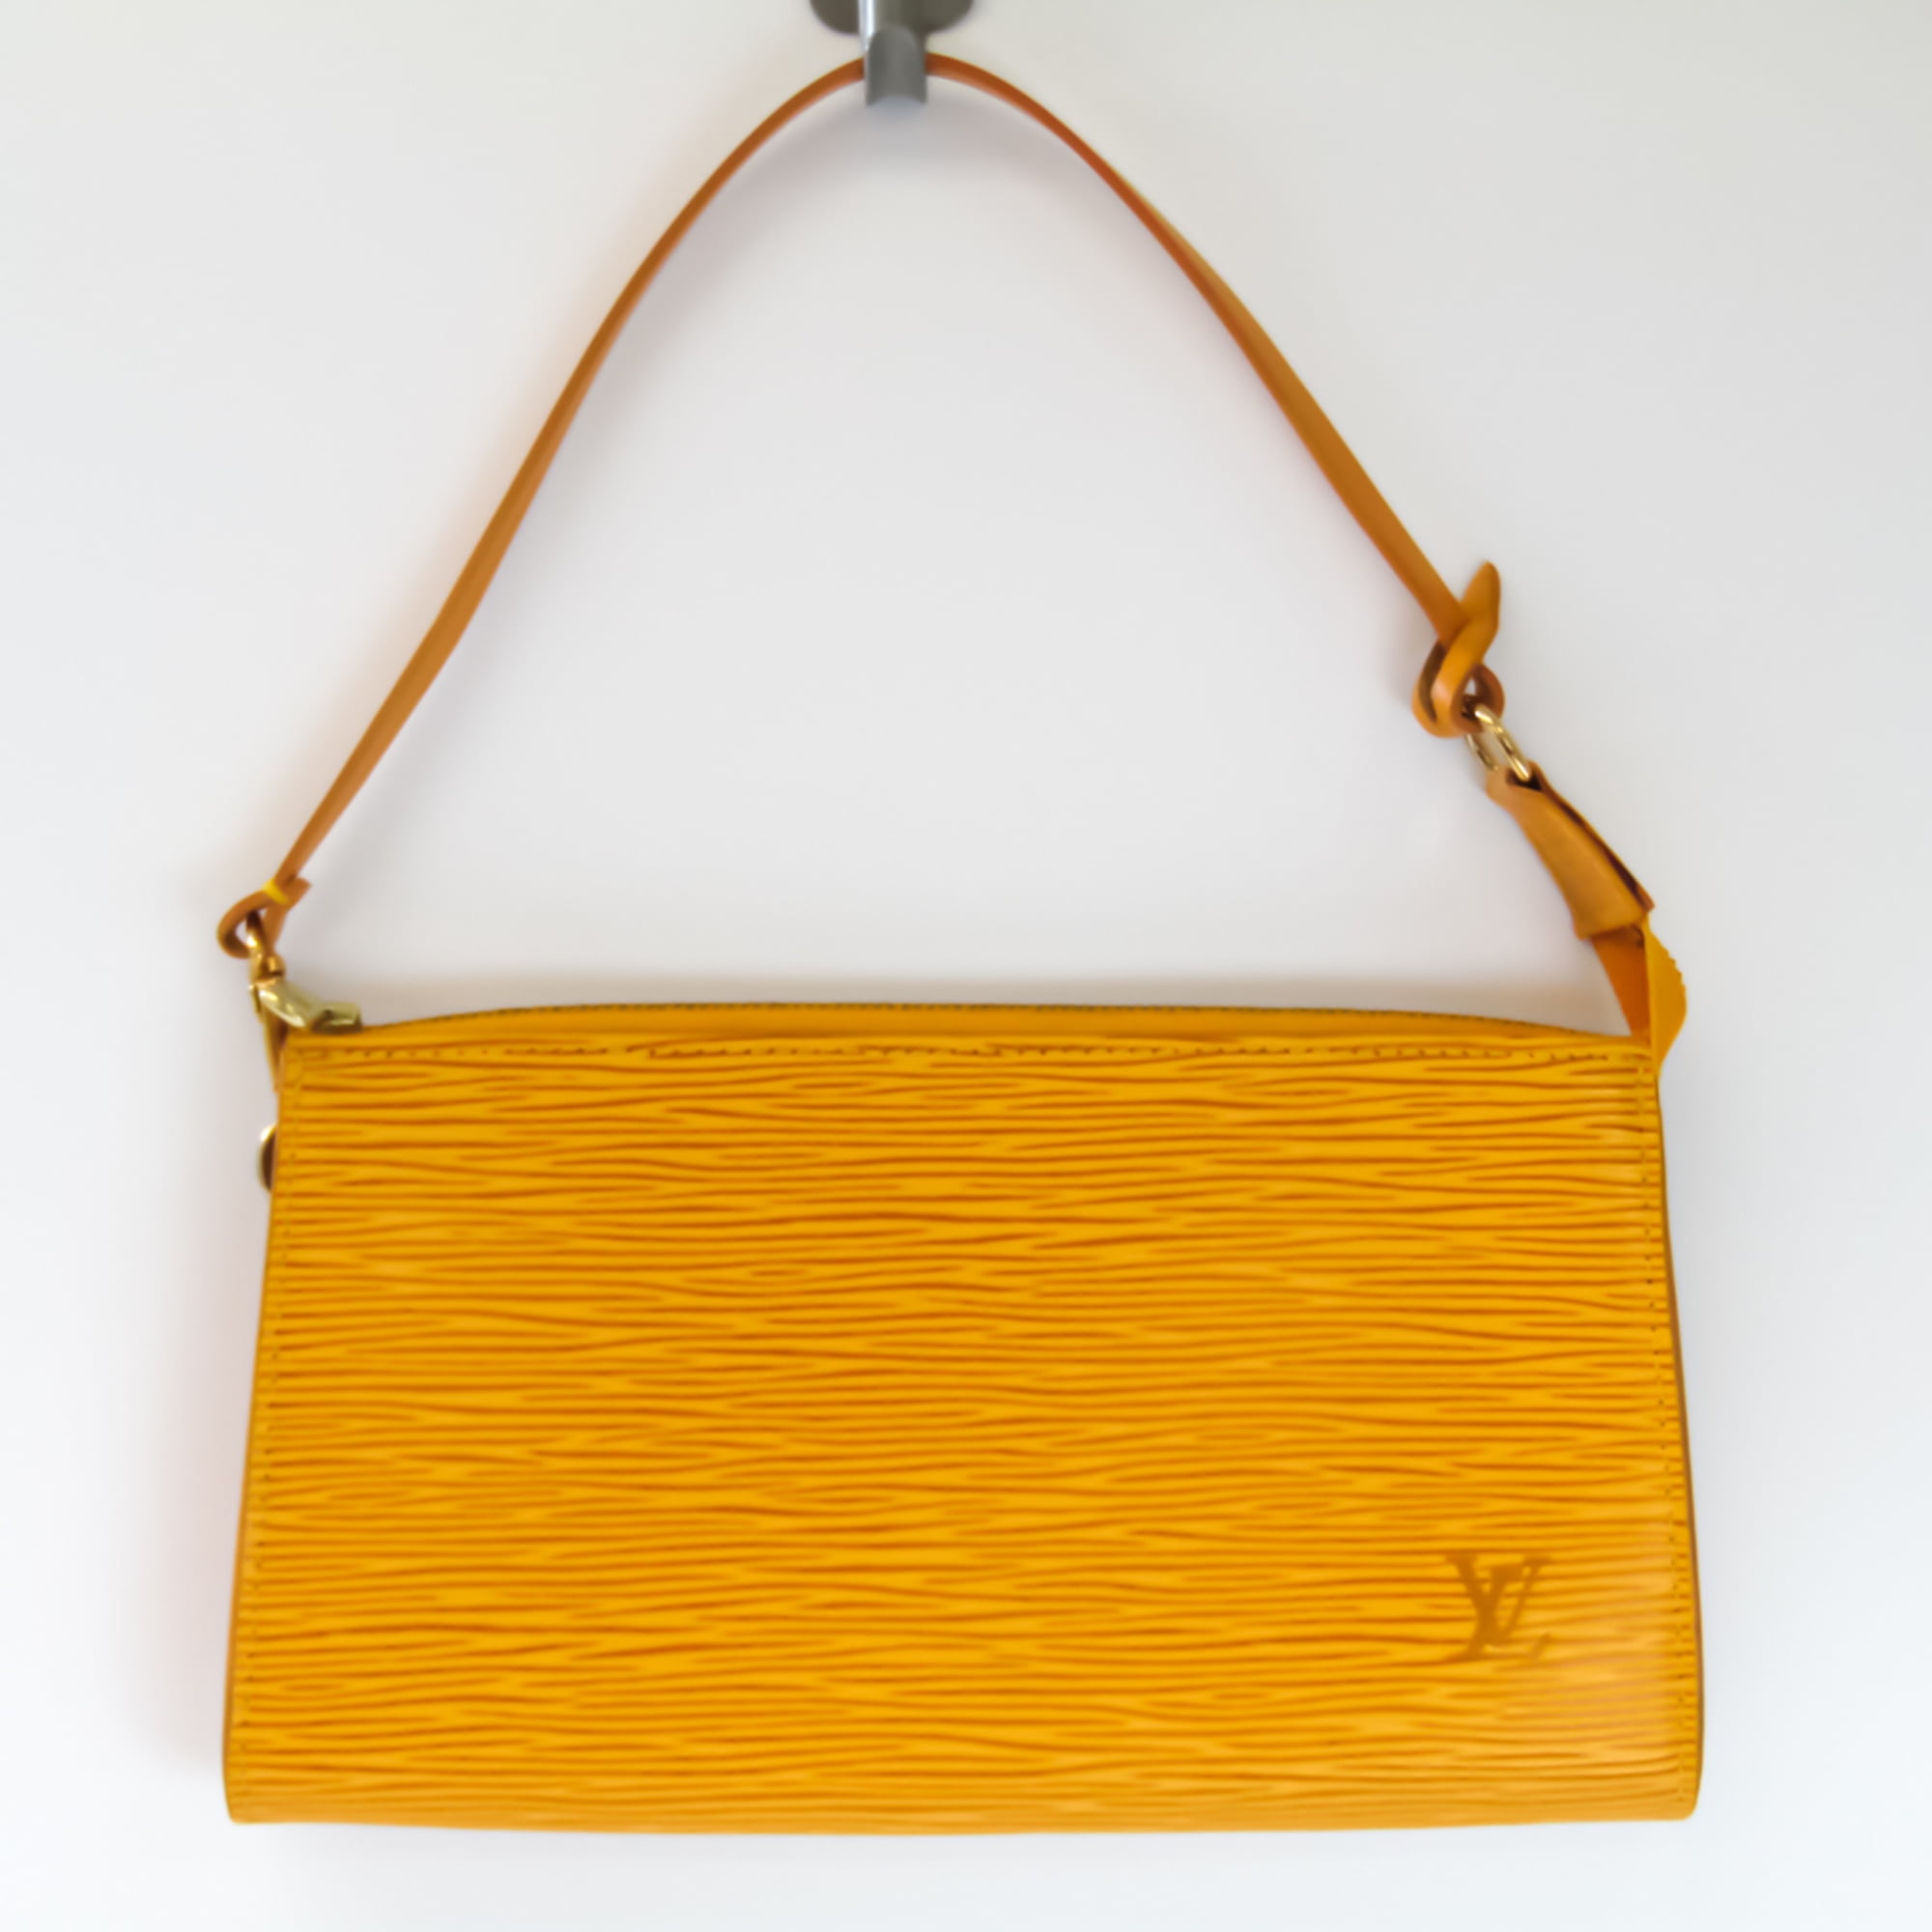 Louis Vuitton - Authenticated Pochette Accessoire Handbag - Synthetic Brown for Women, Never Worn